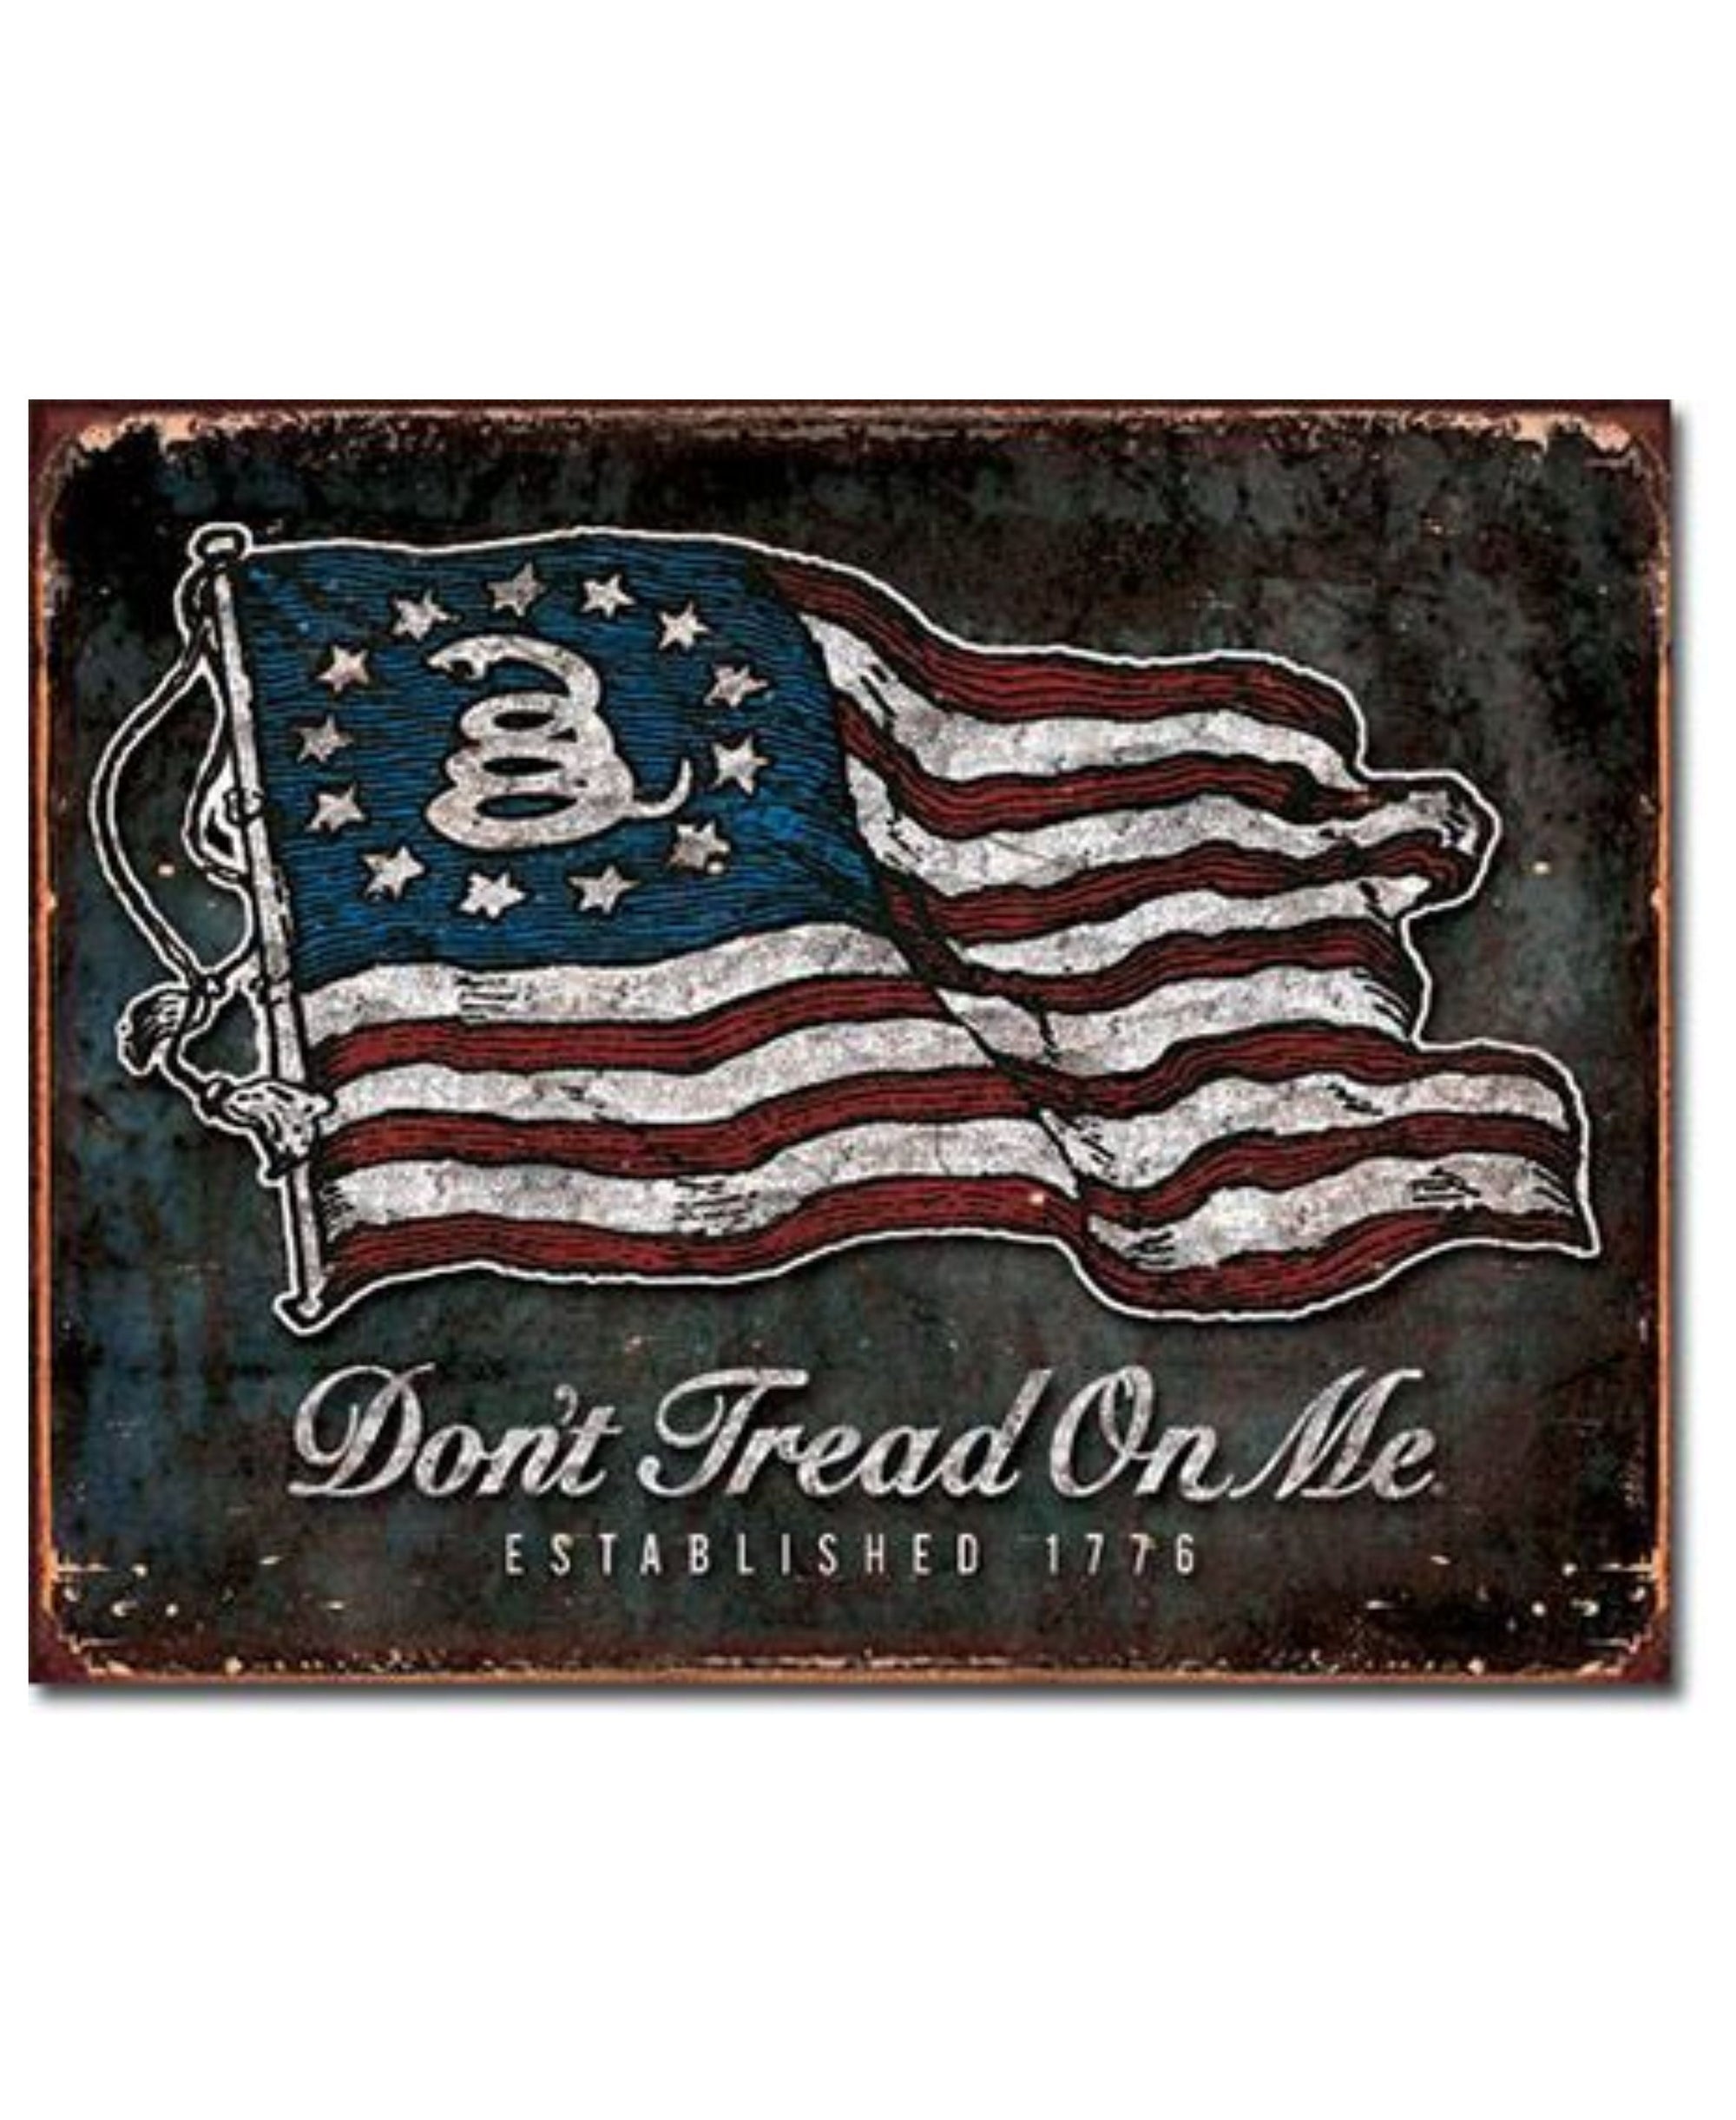 Don't Tread on Me - Vintage Flag Tin Sign